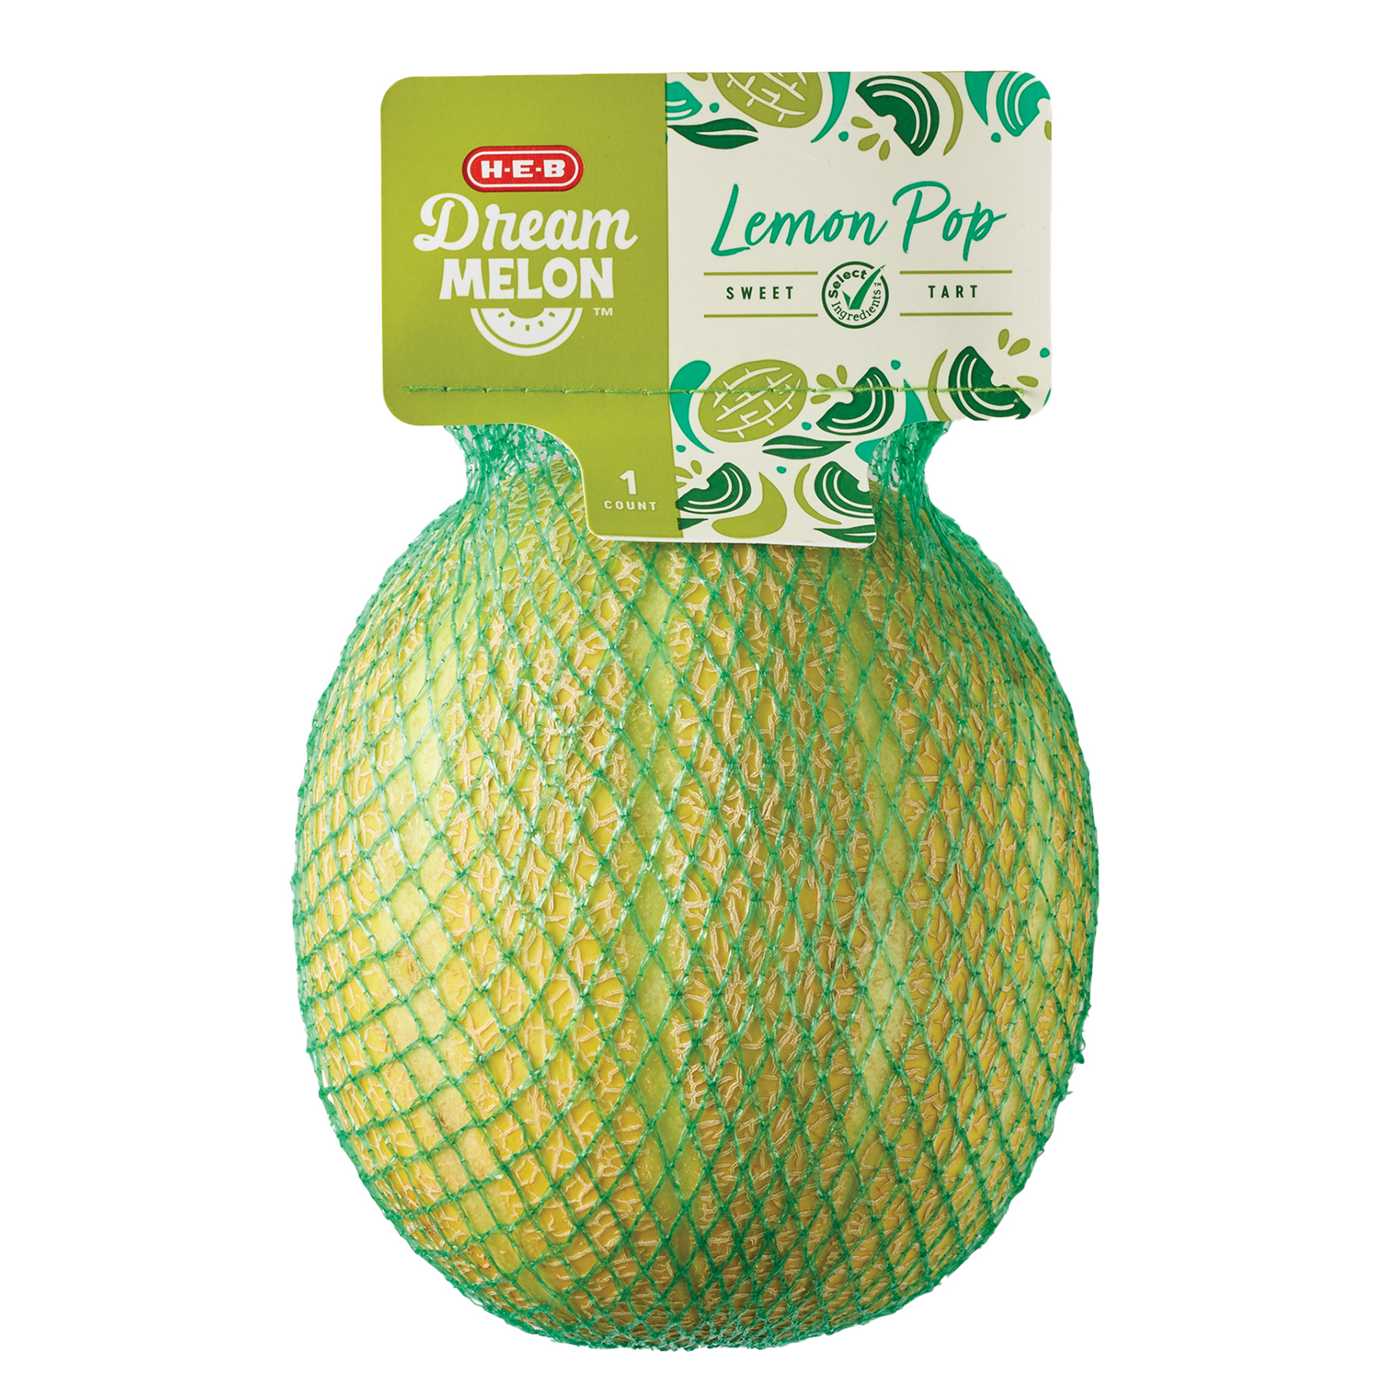 H-E-B Fresh Lemon Pop Dream Melon; image 2 of 2